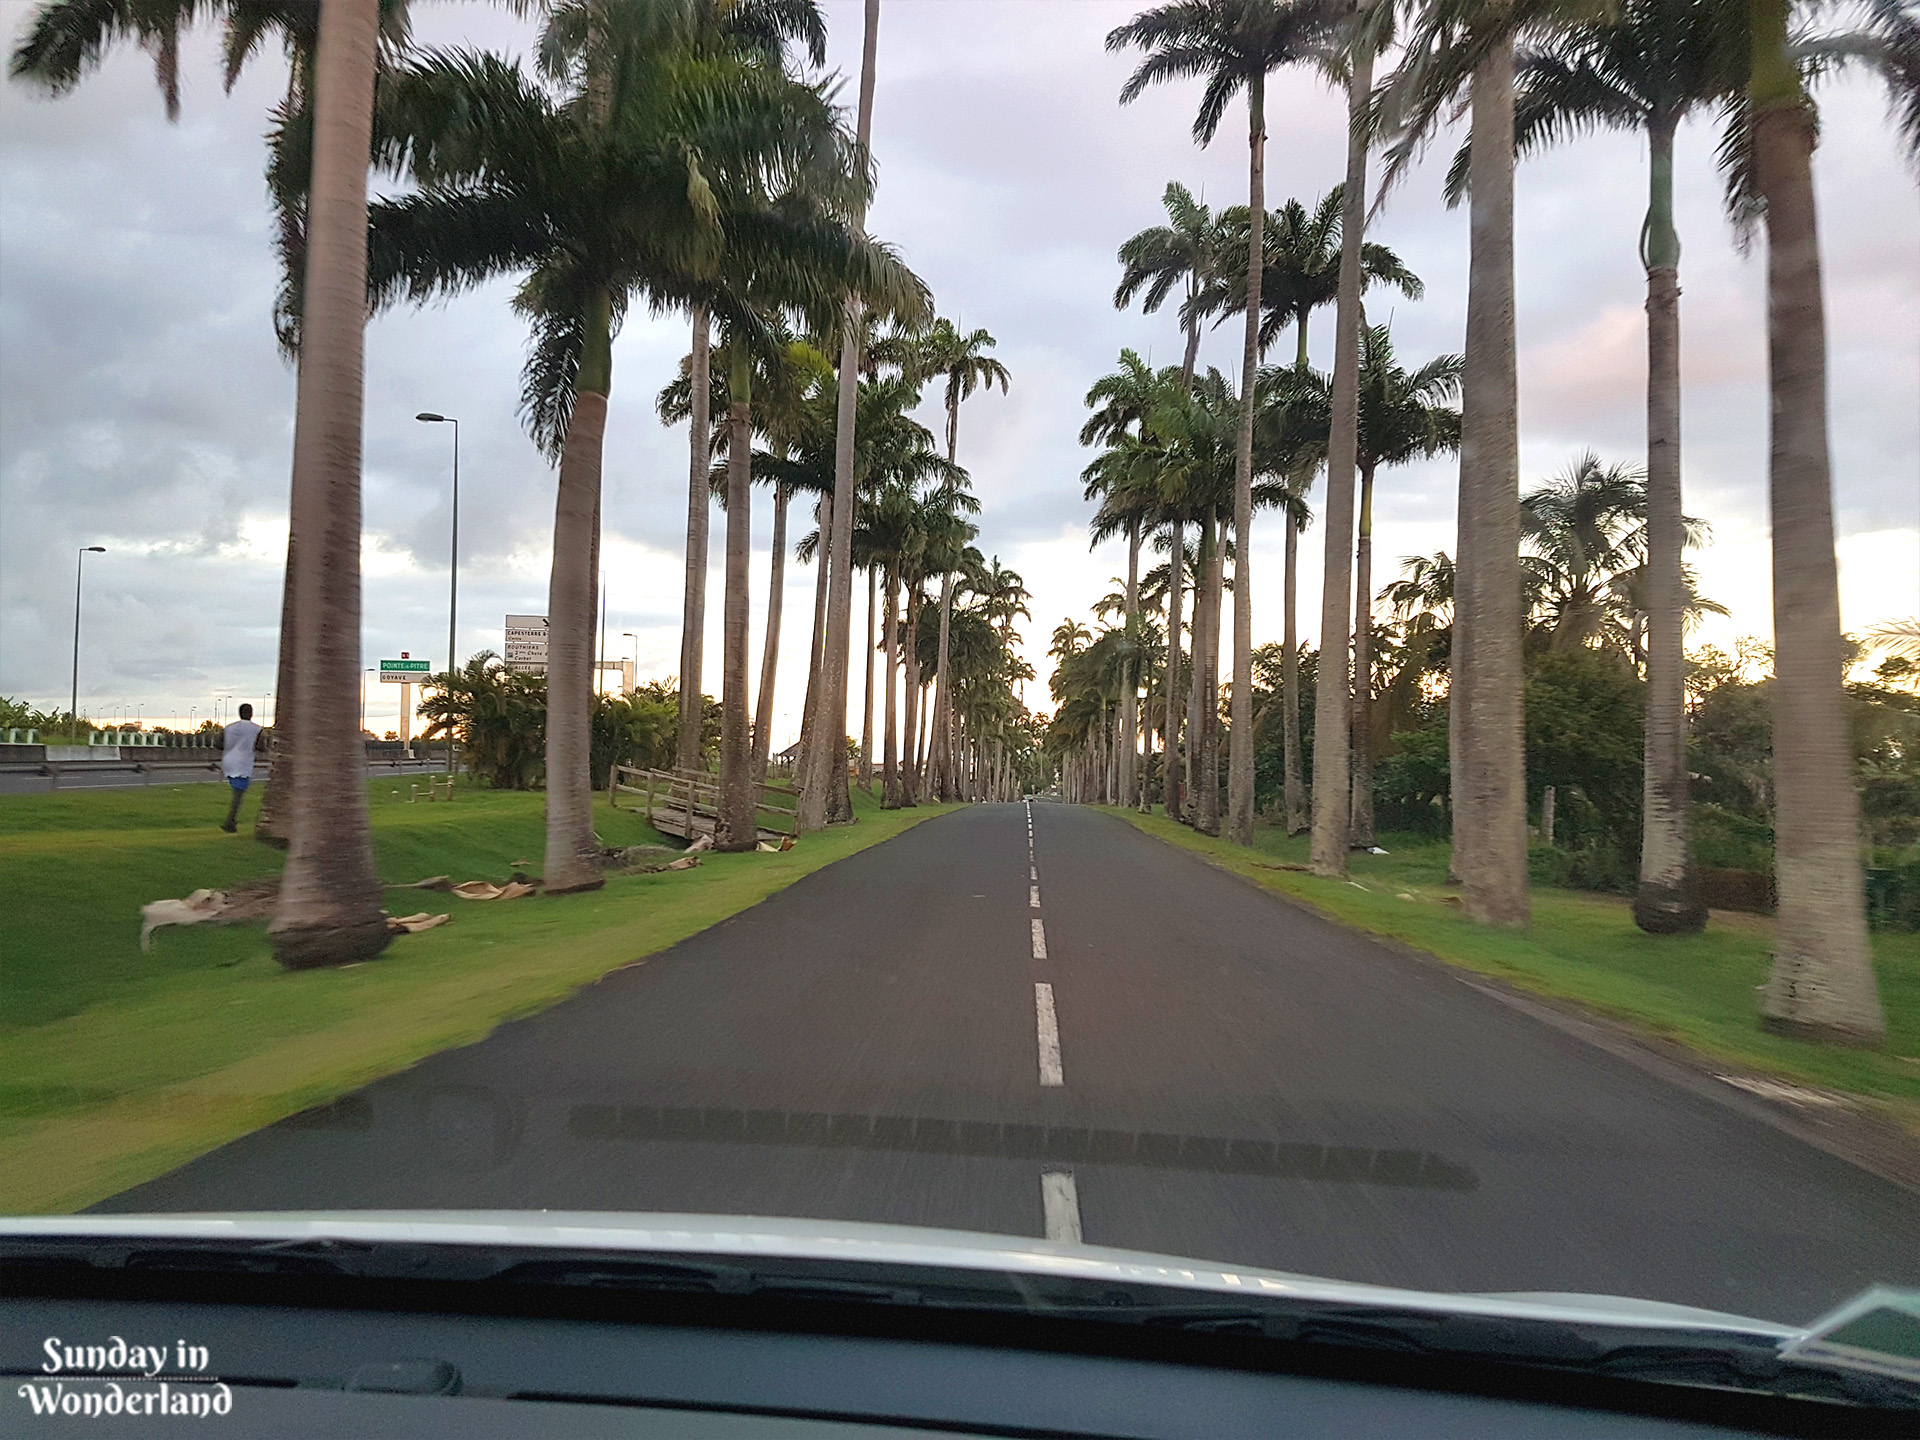 A wonderful ride among the palm trees on the Allée Dumanoir - Guadeloupe - Sunday in Wonderland Blog